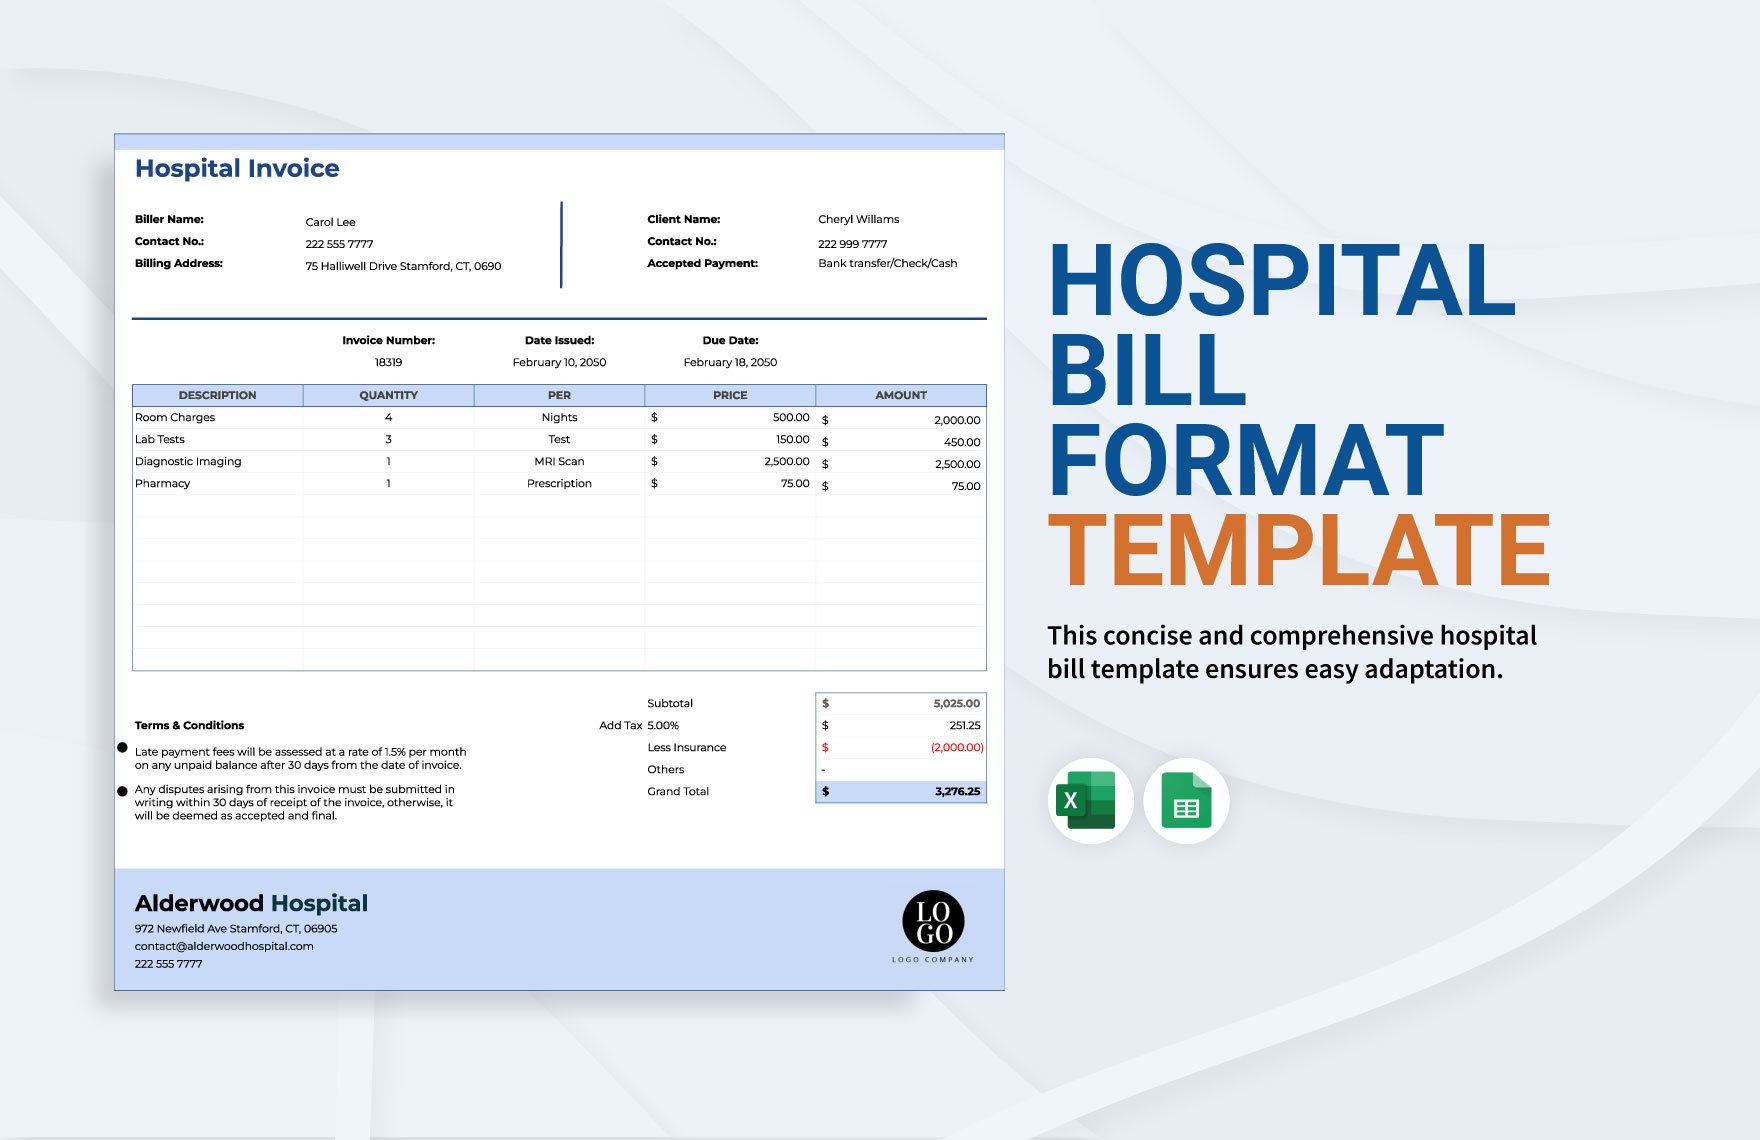 Hospital Bill Format Template in Excel, Google Sheets